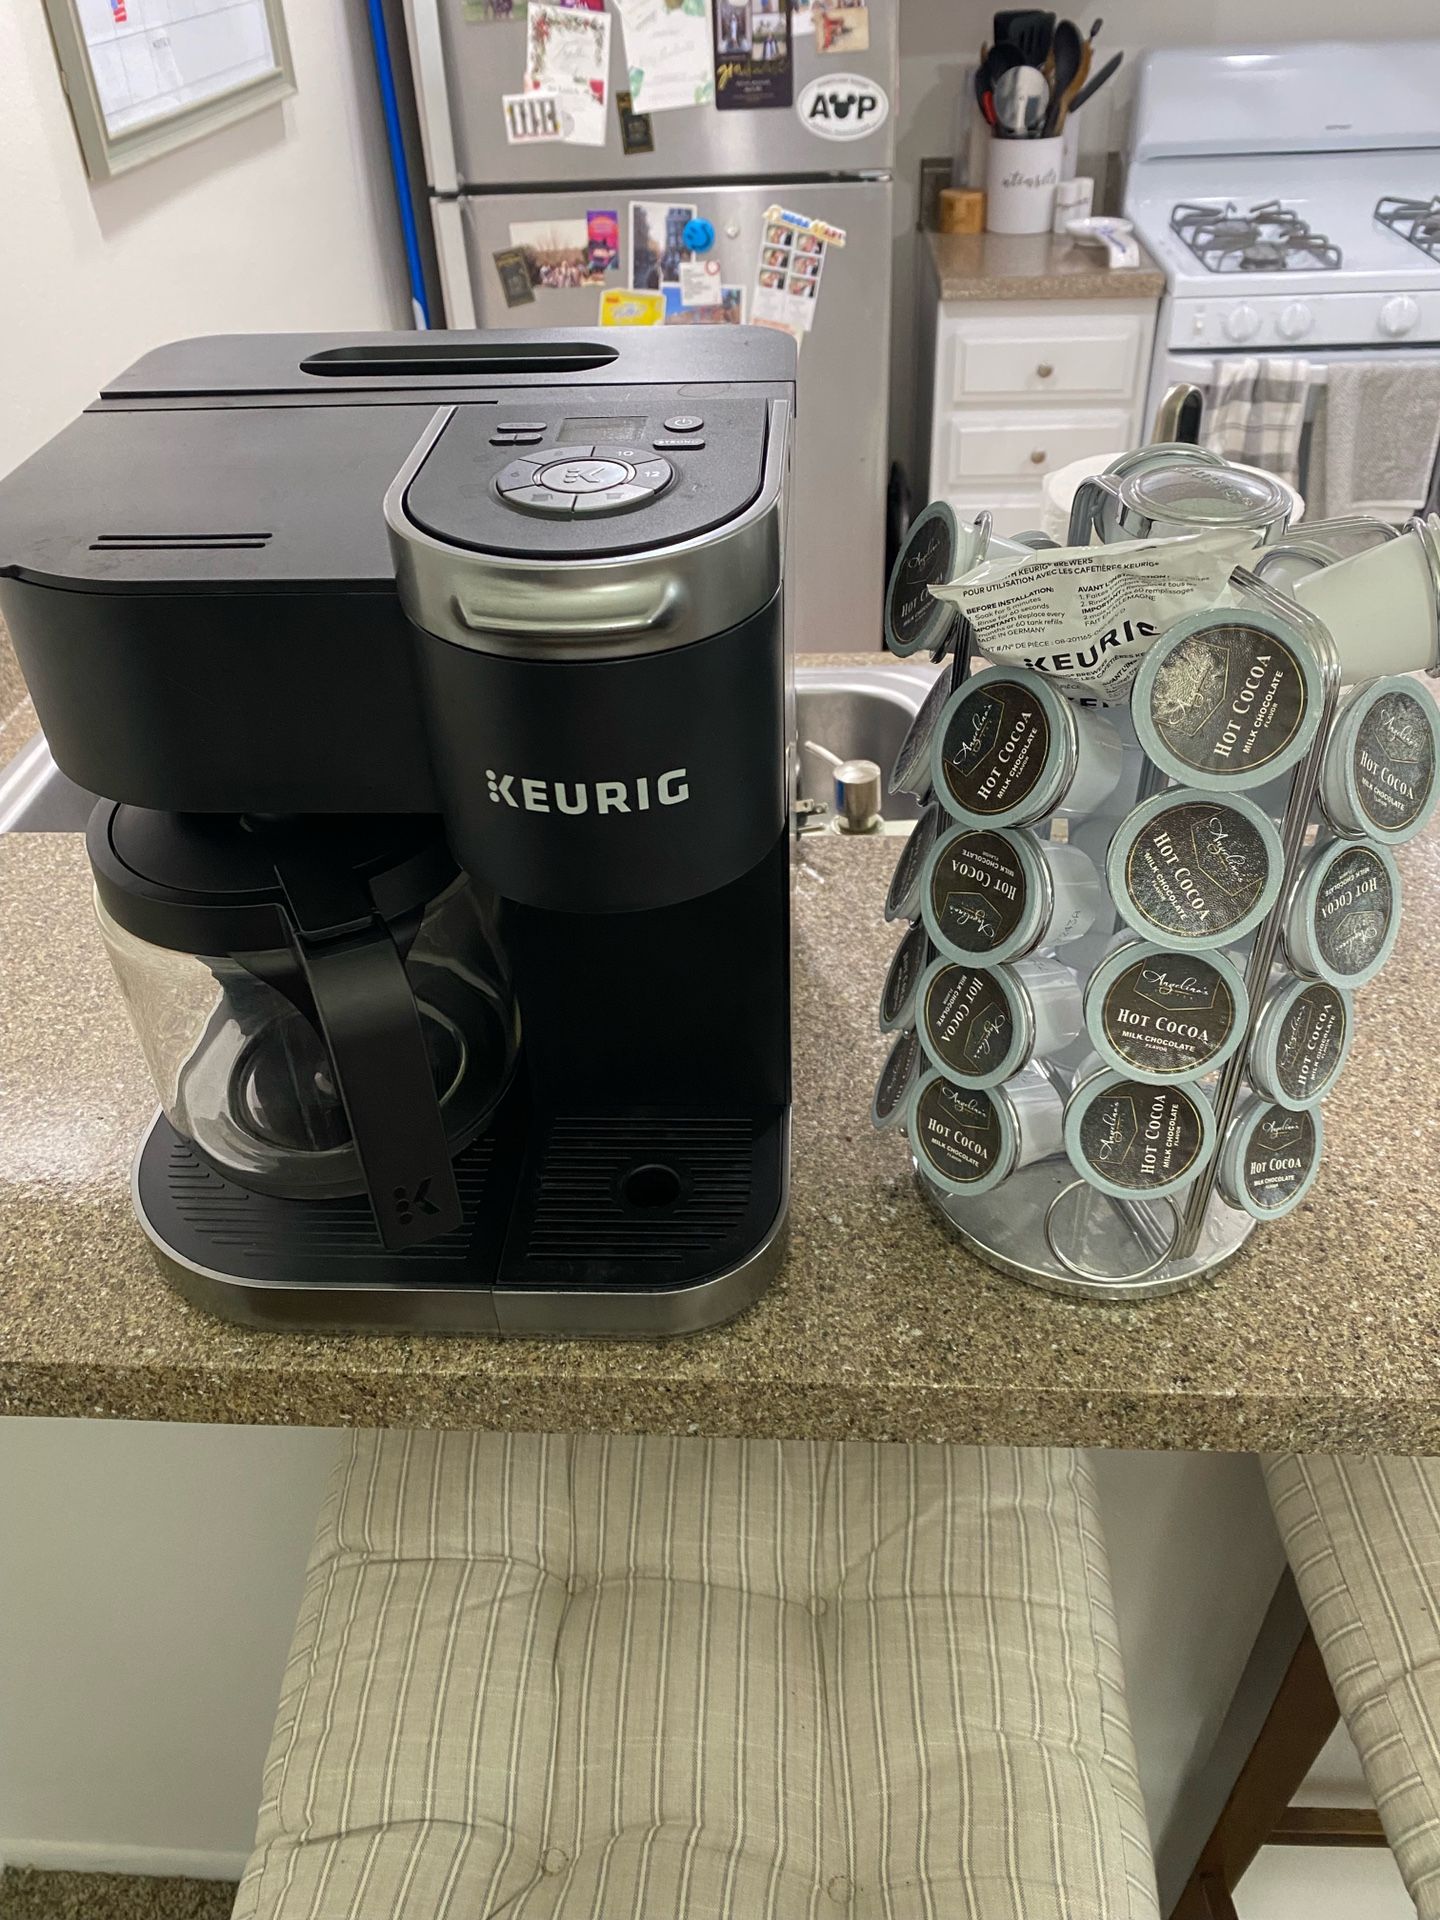 Keurig K-Duo Single Serve and Carafe Coffee Maker